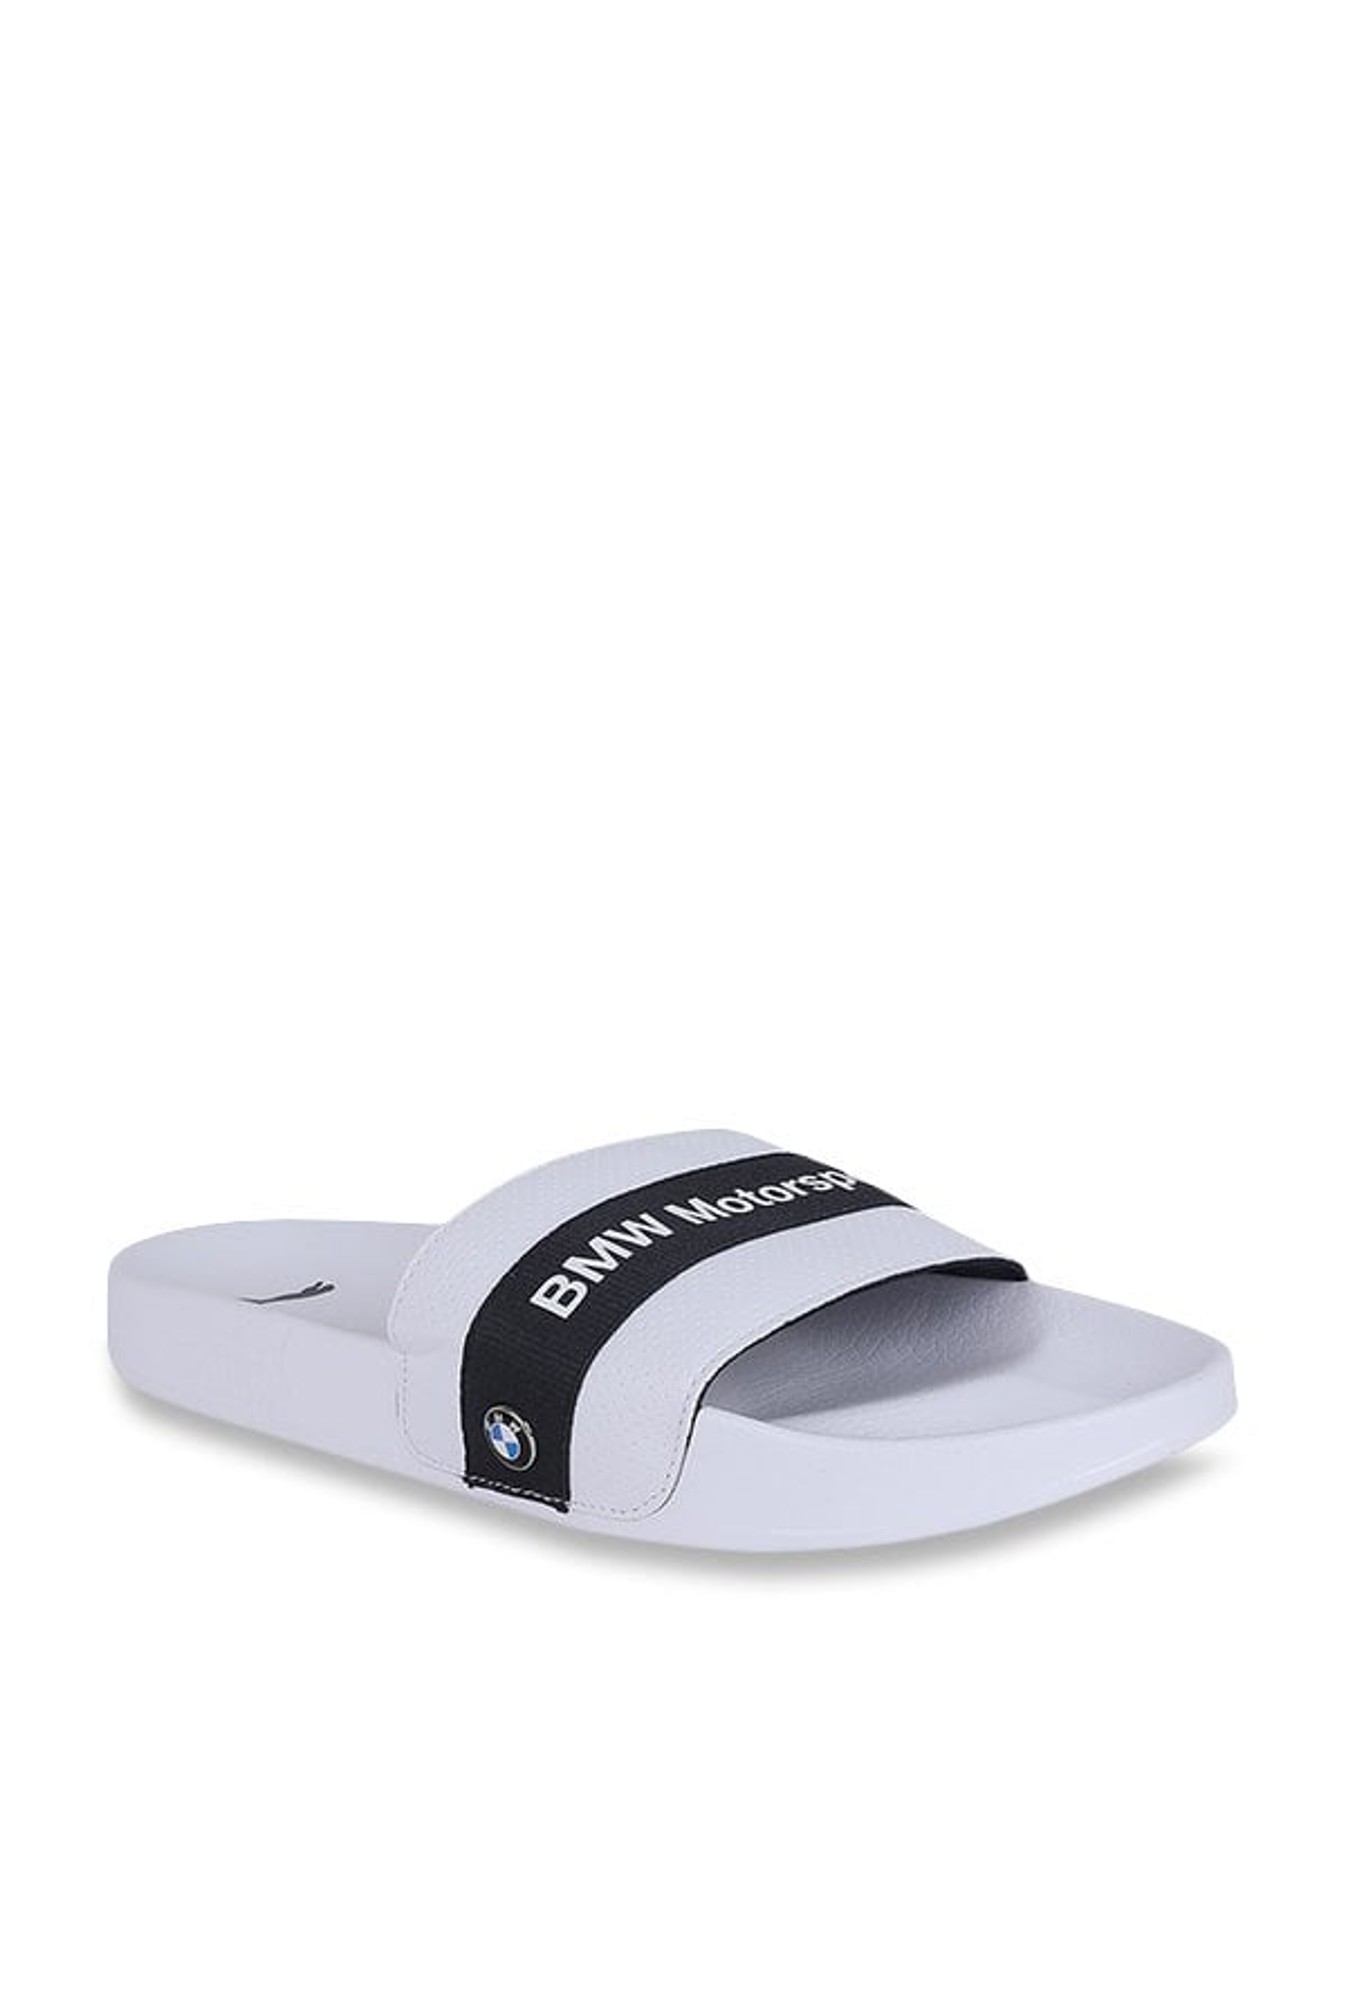 puma bmw slippers white